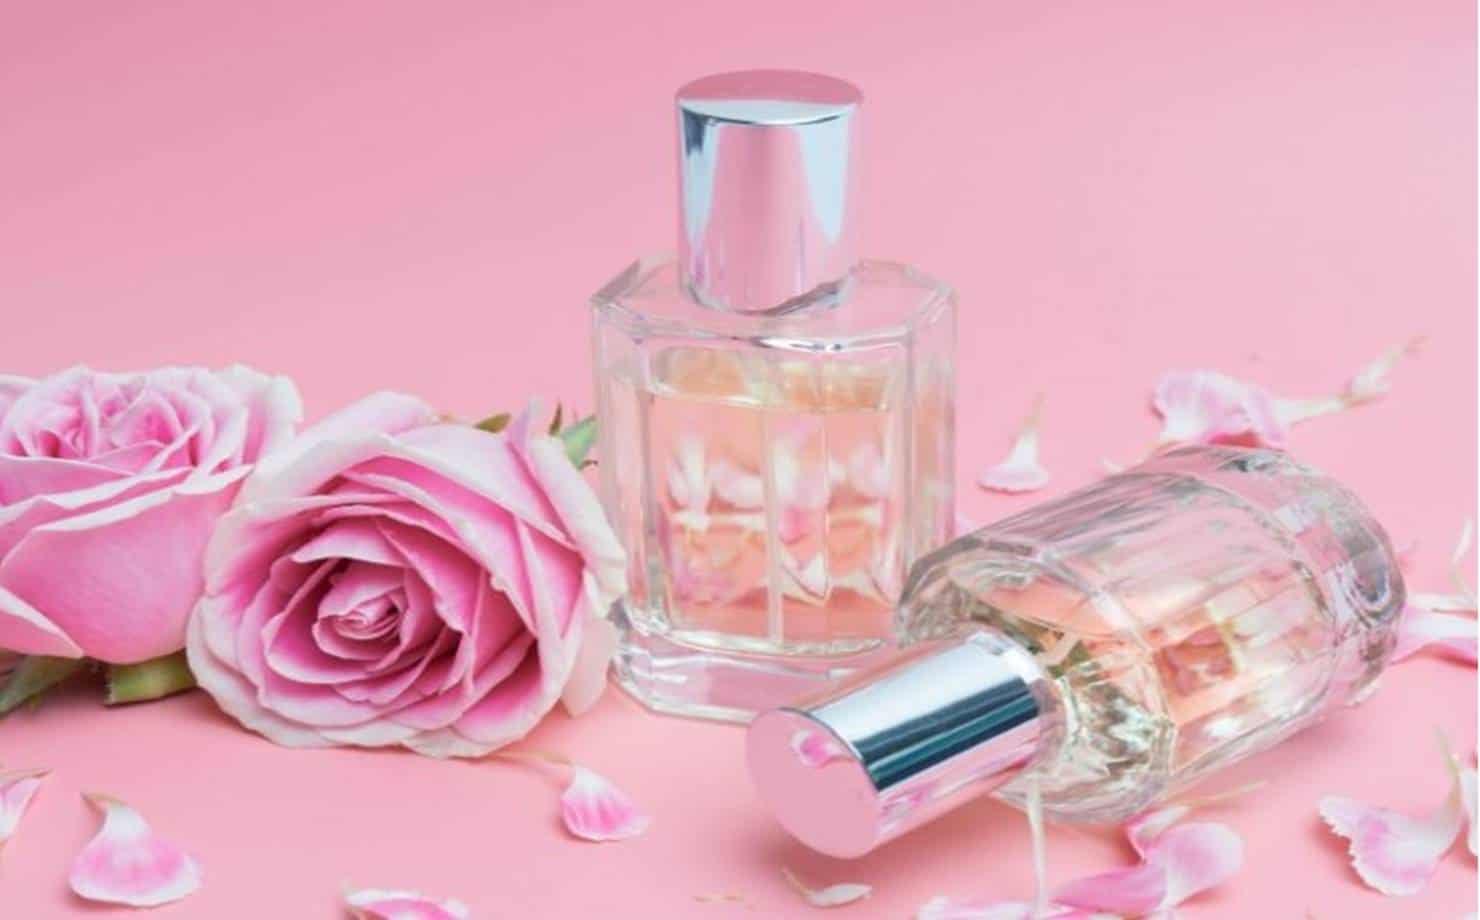 Frascos de Perfume e Rosa Expostos na Bancada